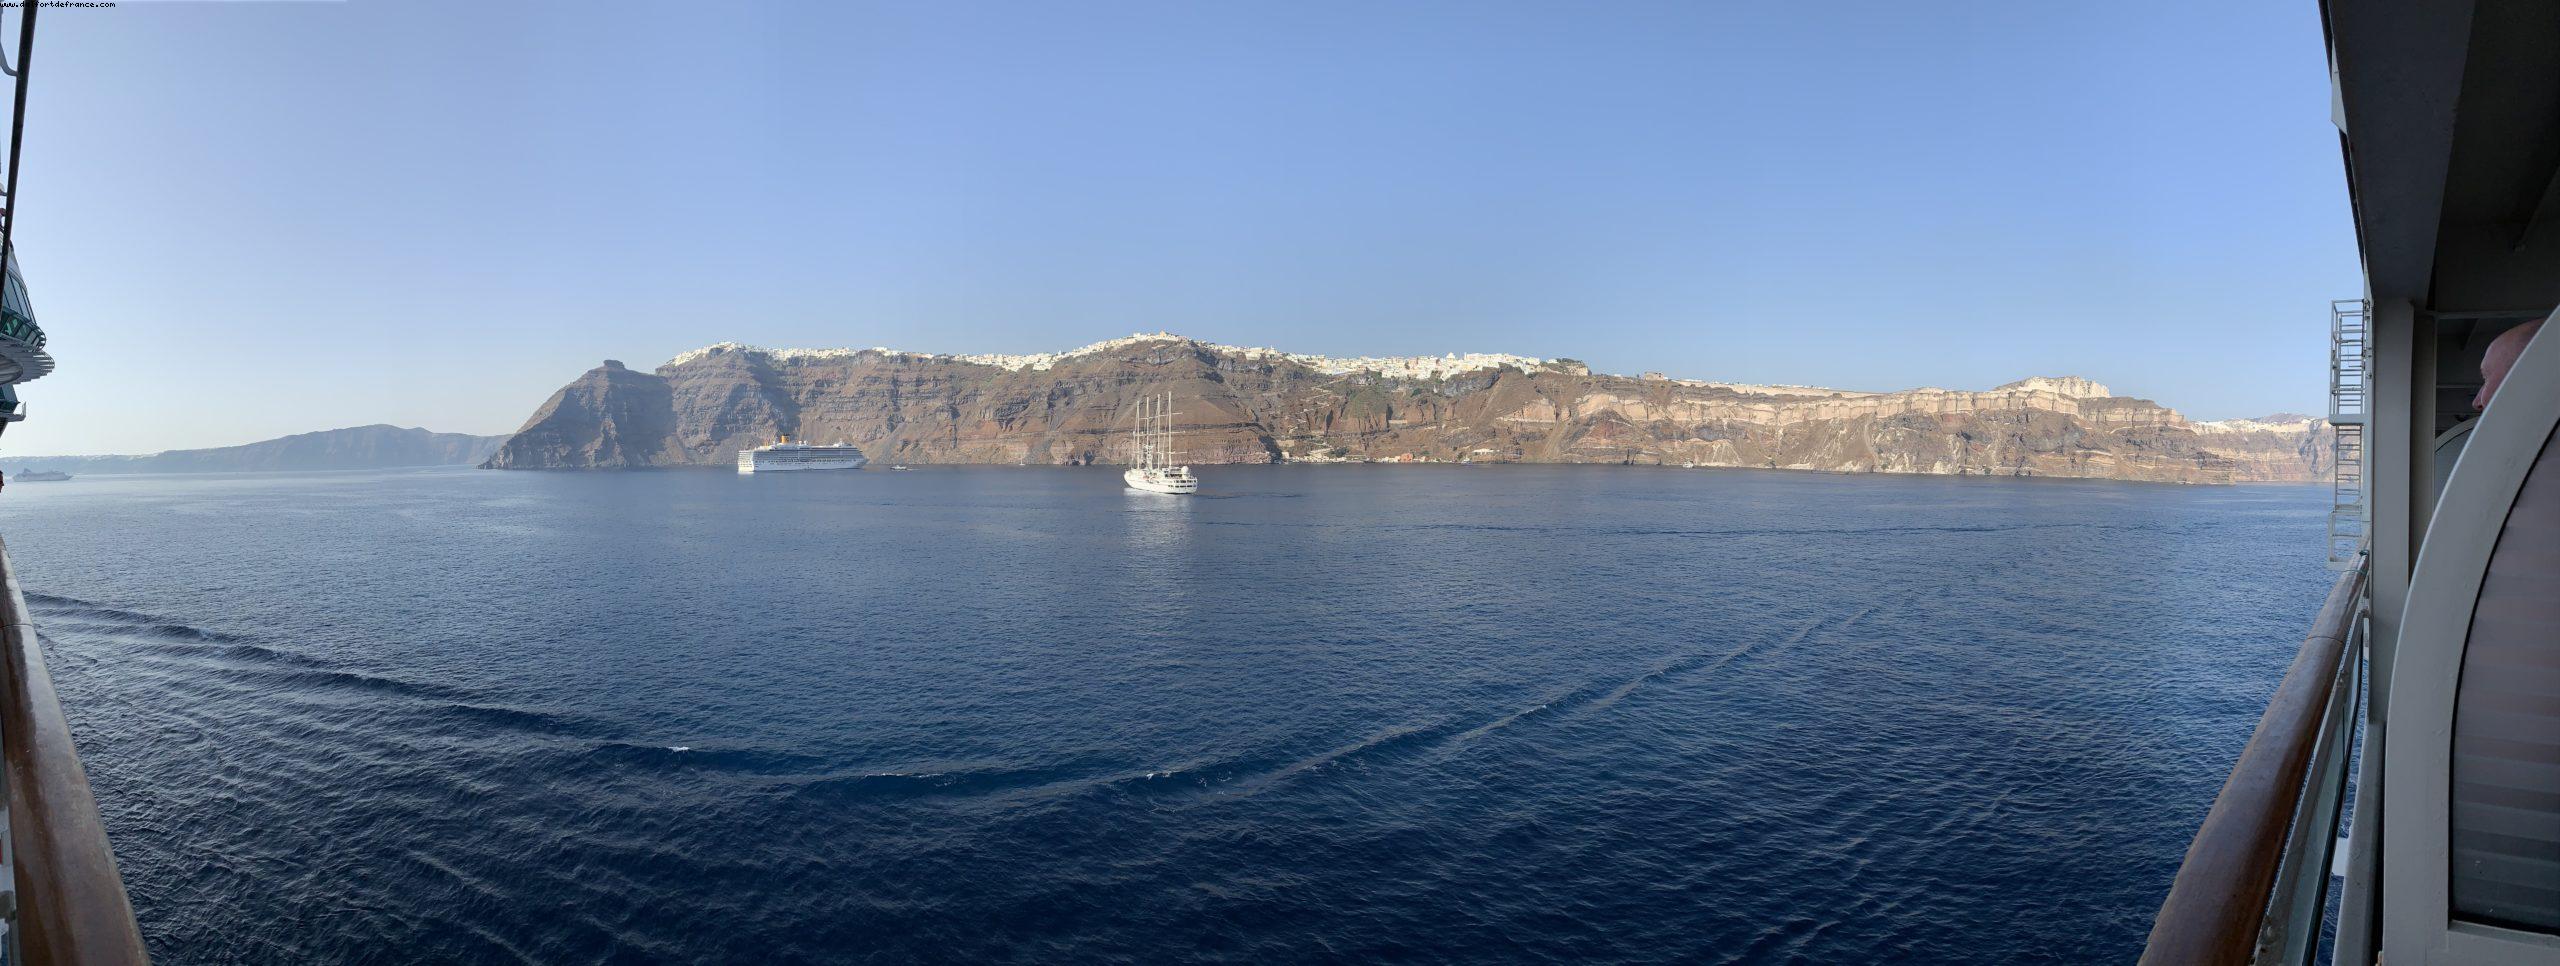 4638 Santorini, Greece - Our 2nd 'The Cruise' - aka La Demence Cruise - (Rhapsody of the Seas)